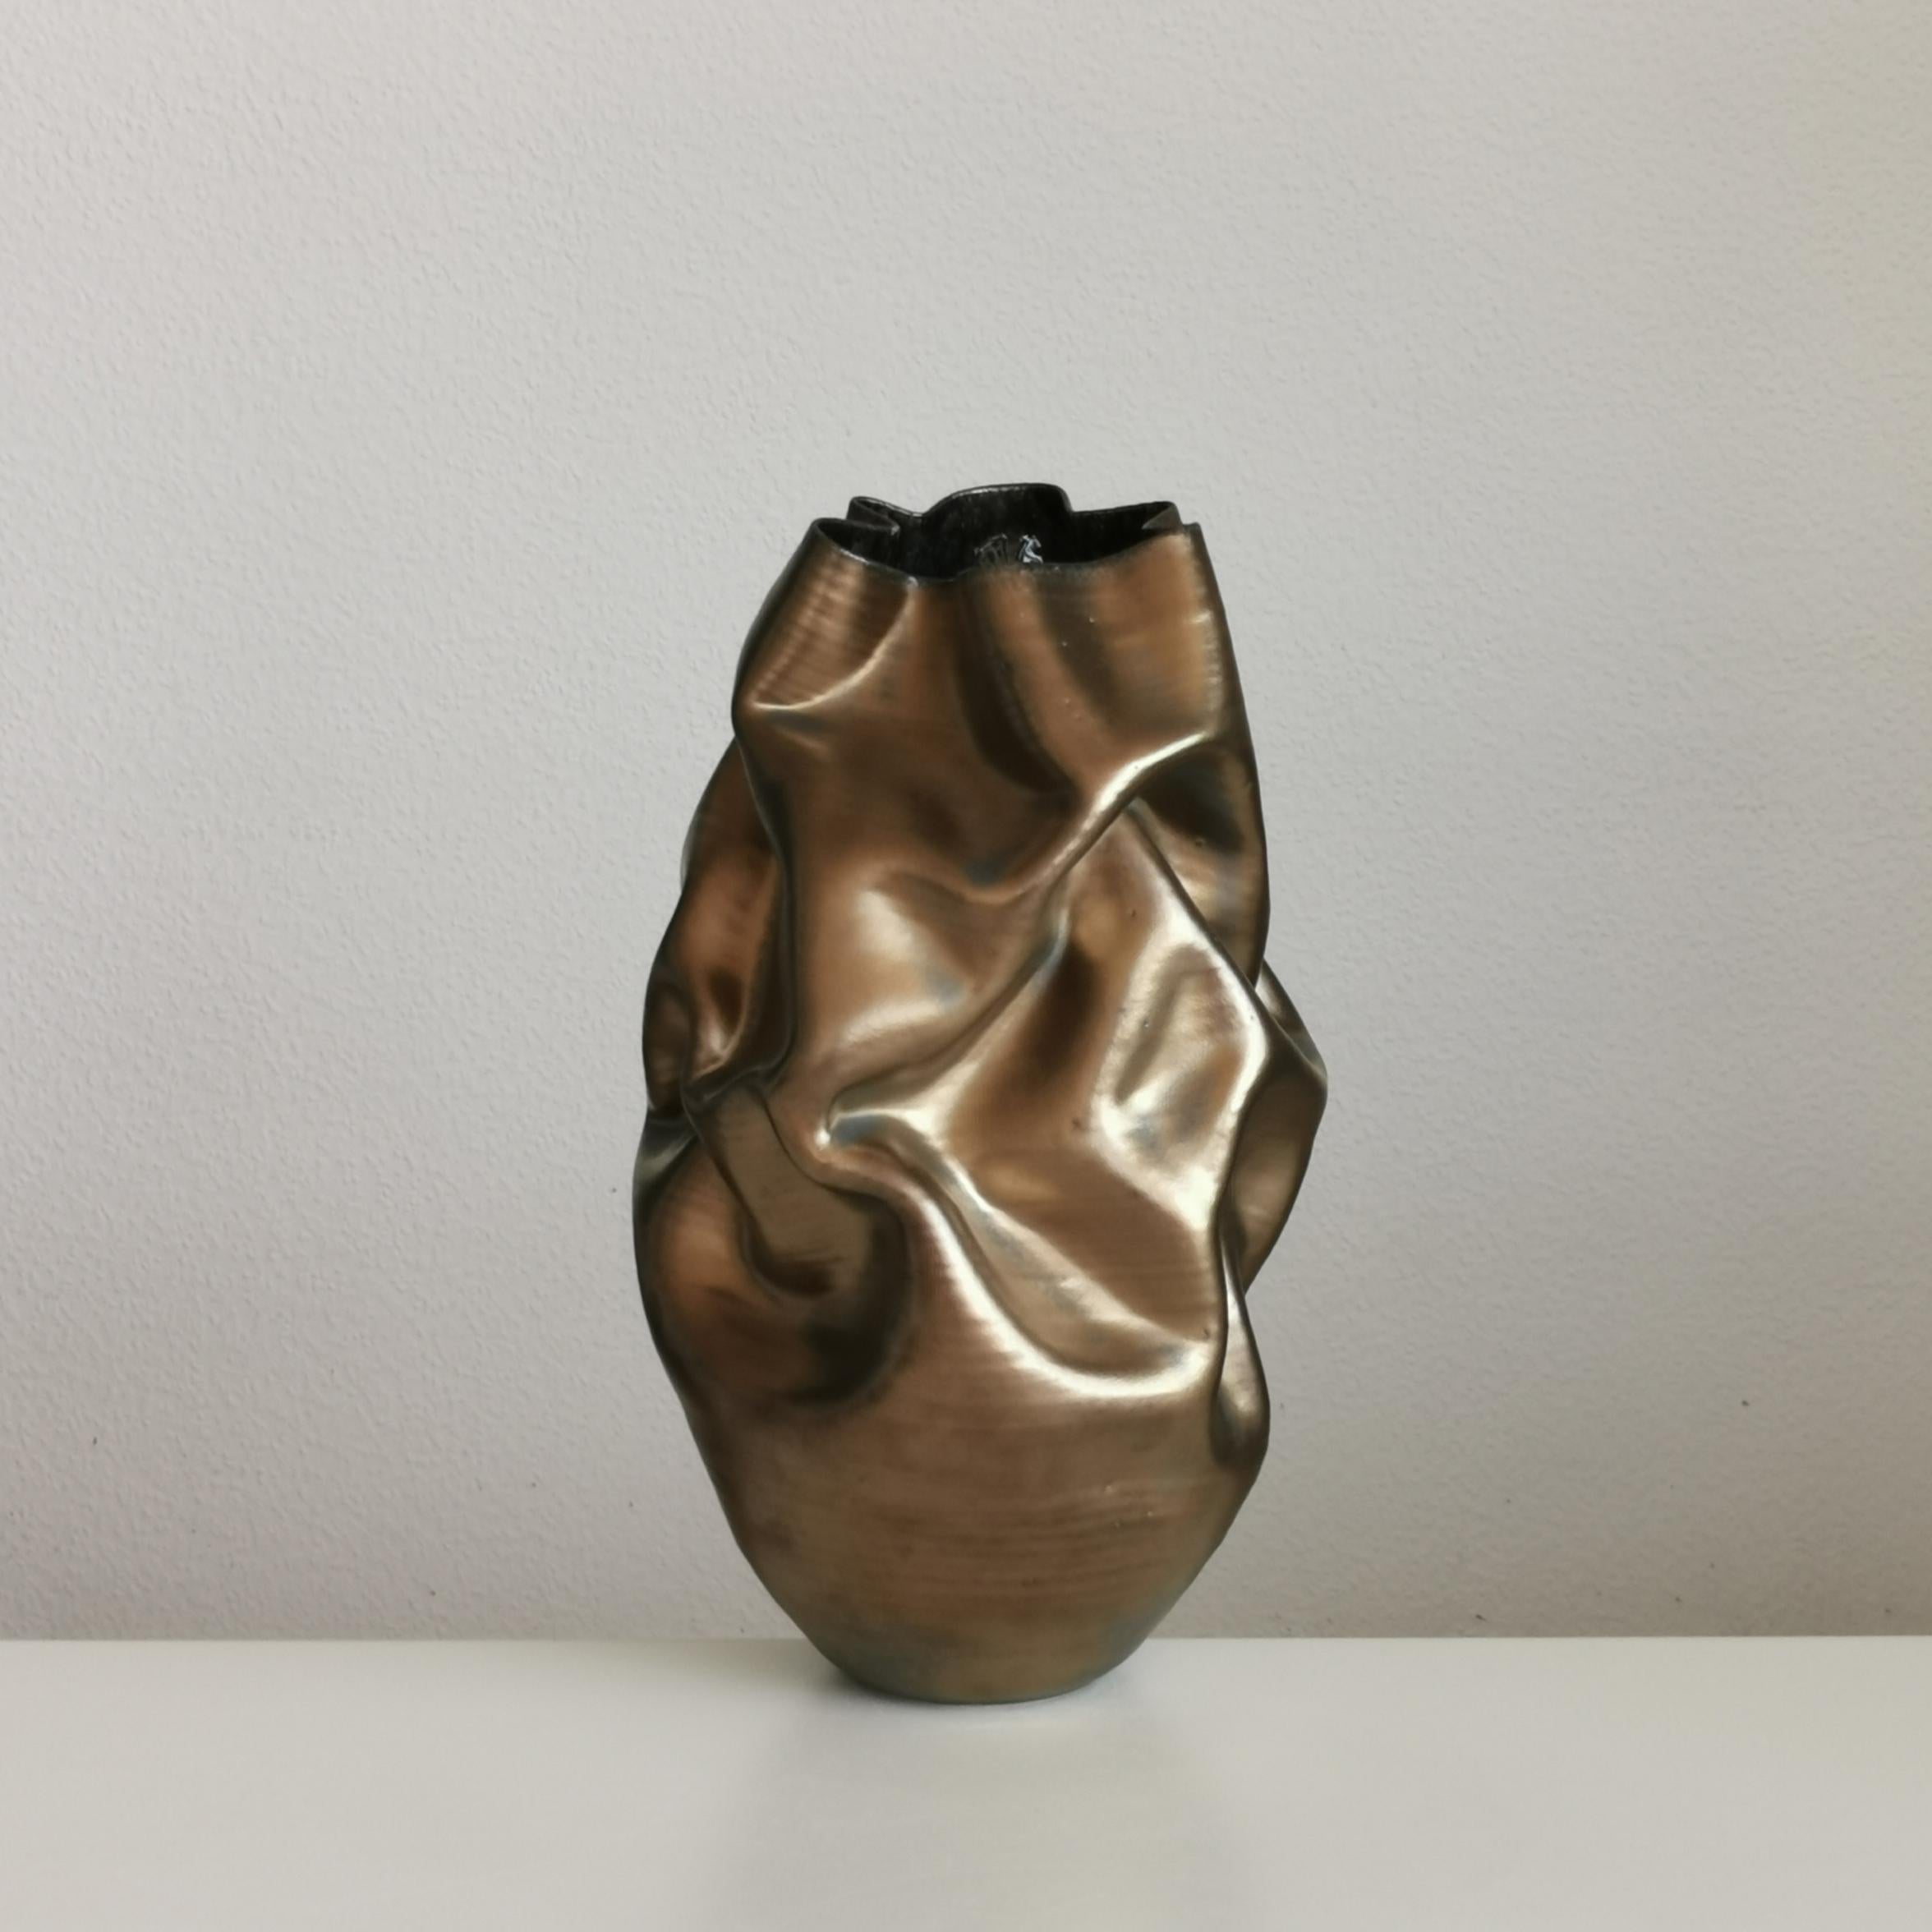 Spanish Medium Tall Gold Crumpled Form, Vessel No.131, Ceramic Sculpture For Sale